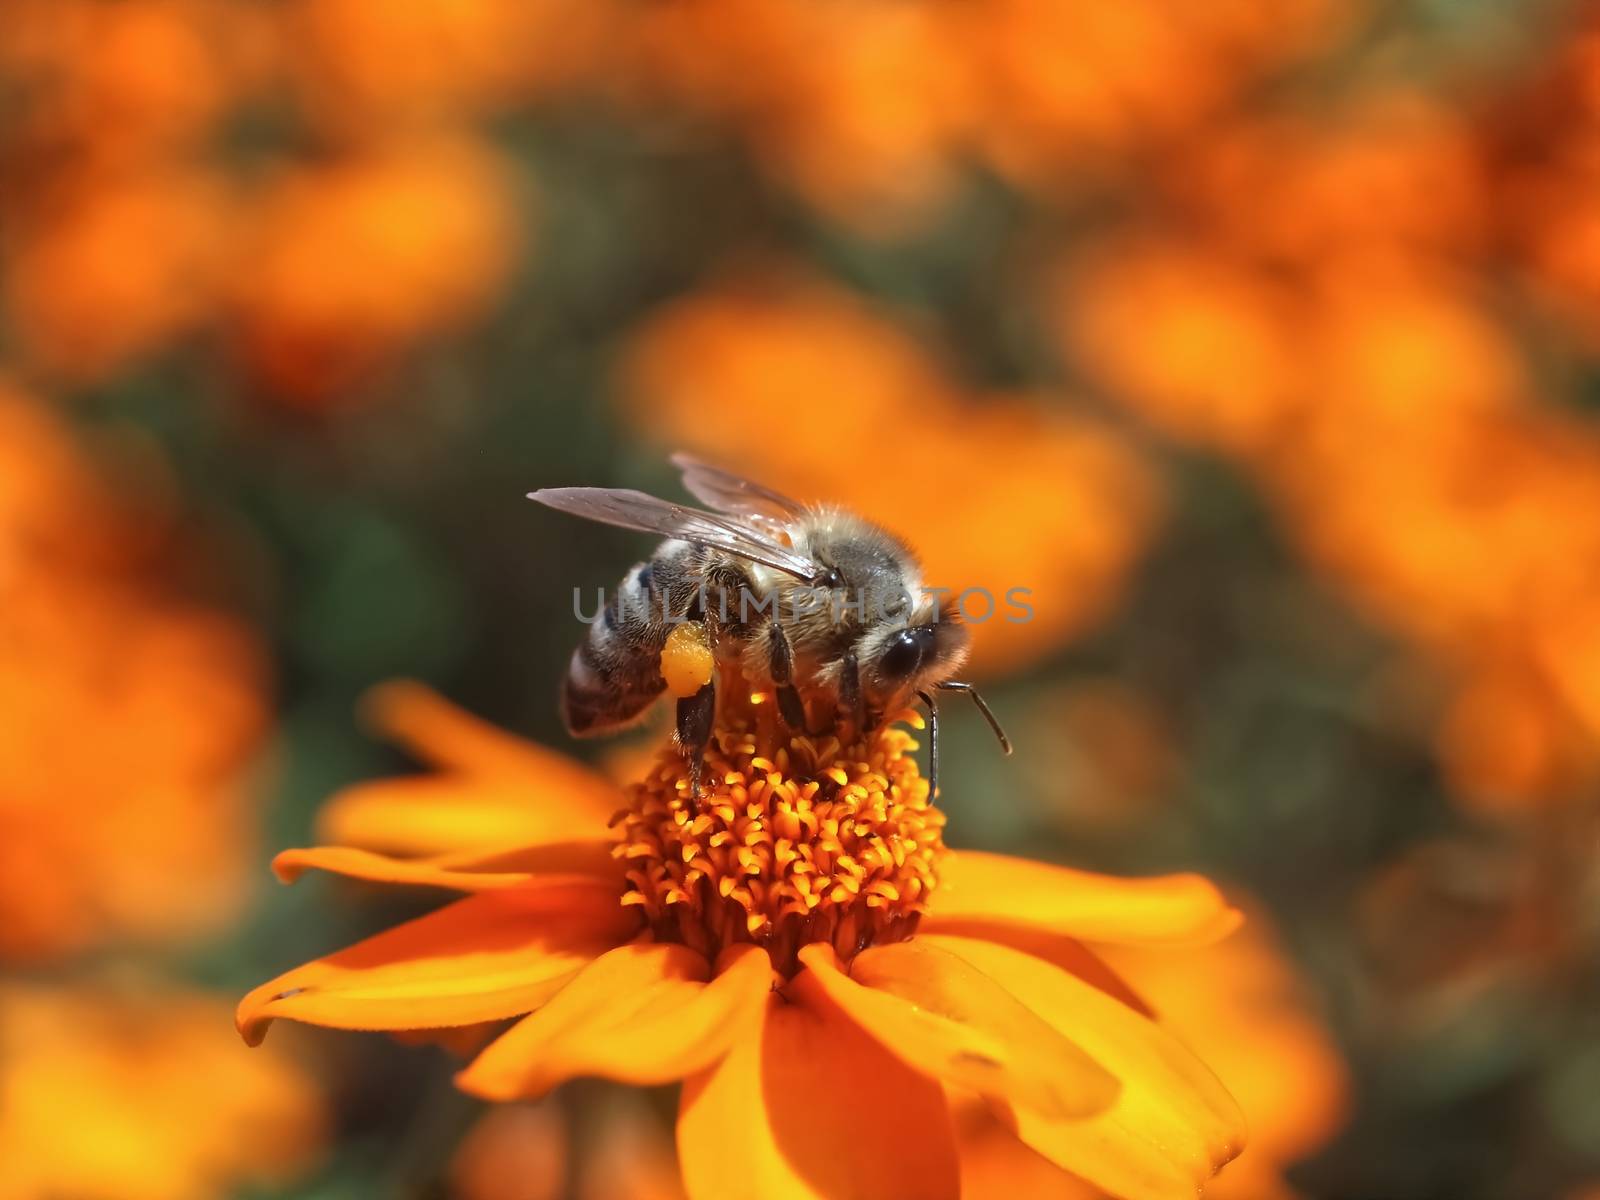 Closeup of a honey bee collecting pollen on orange zinnia flowers by Stimmungsbilder